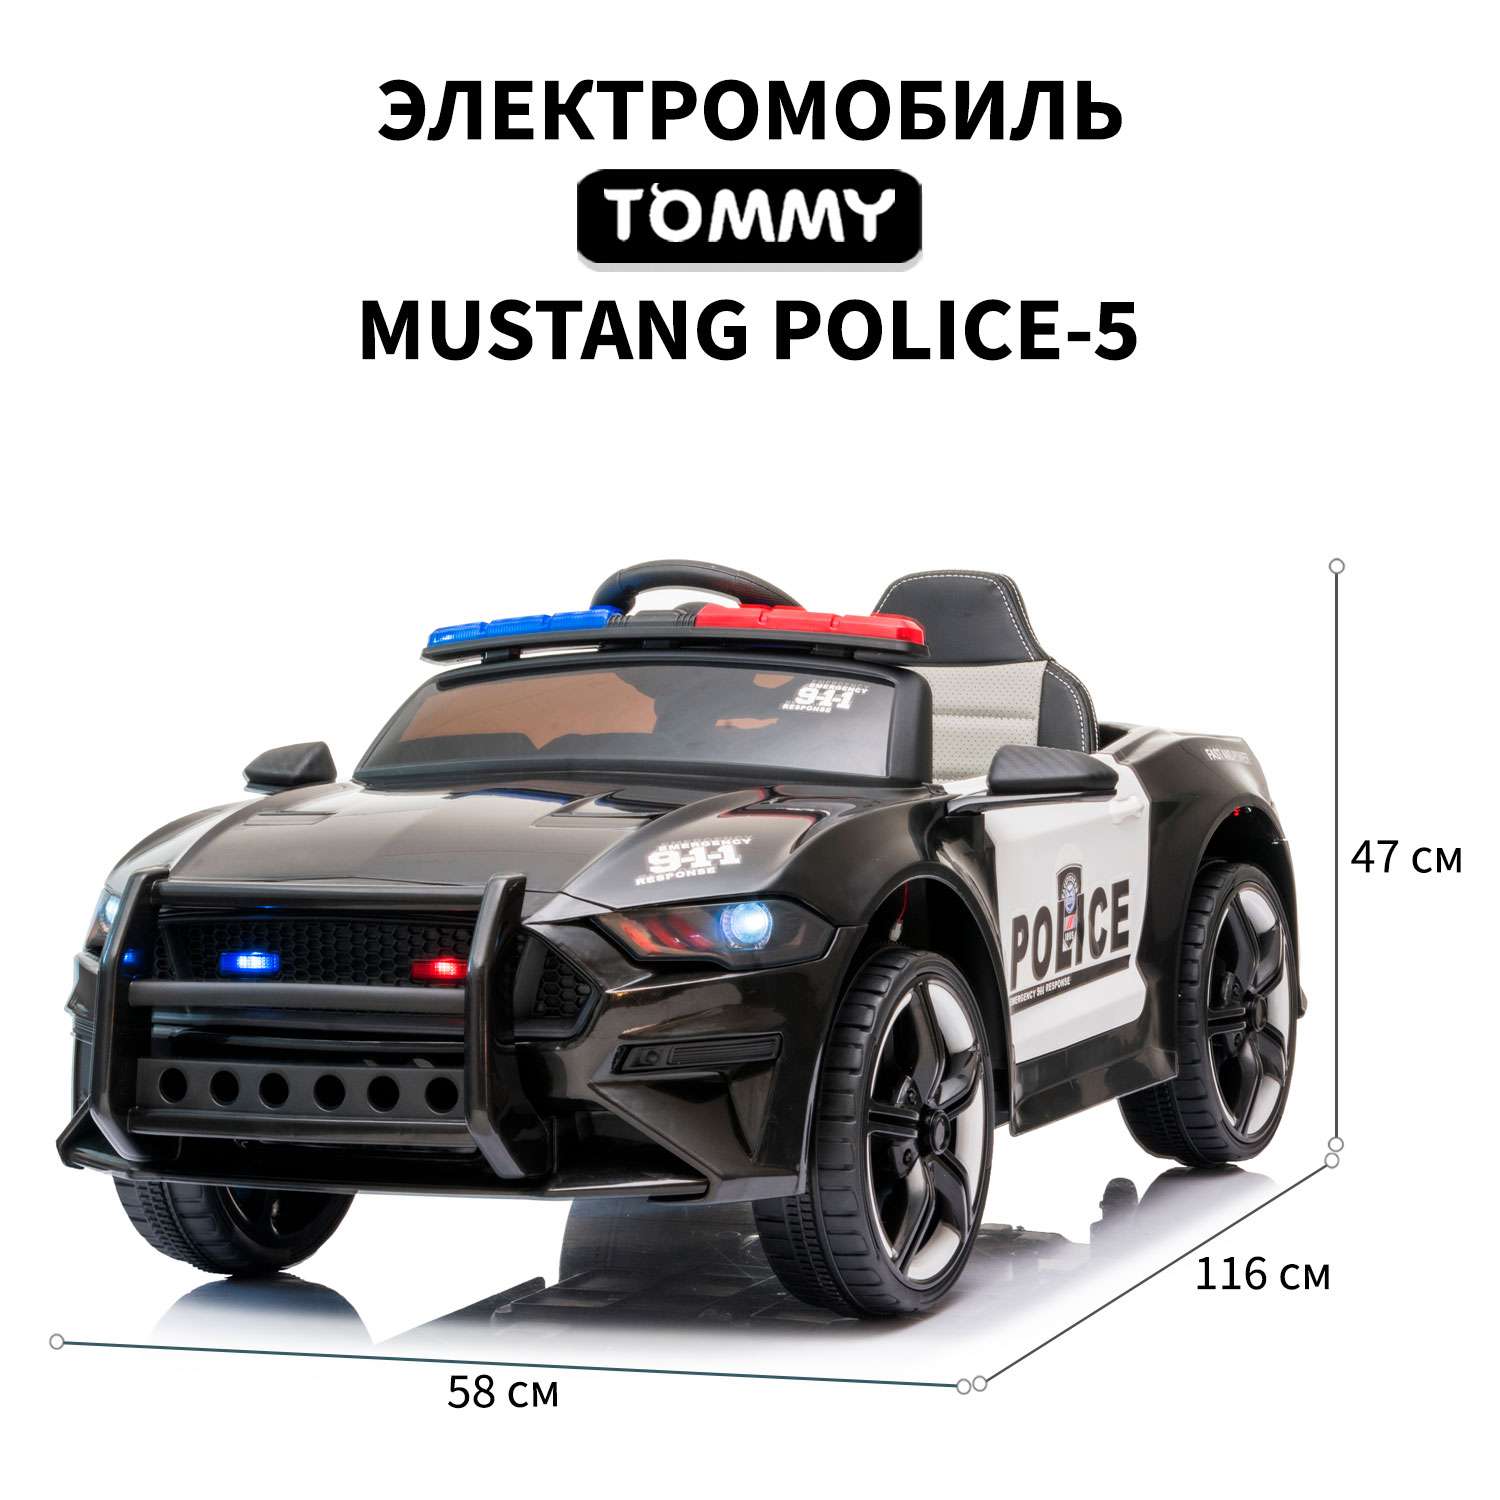 Электромобиль TOMMY Mustang Police-5 черный - фото 2